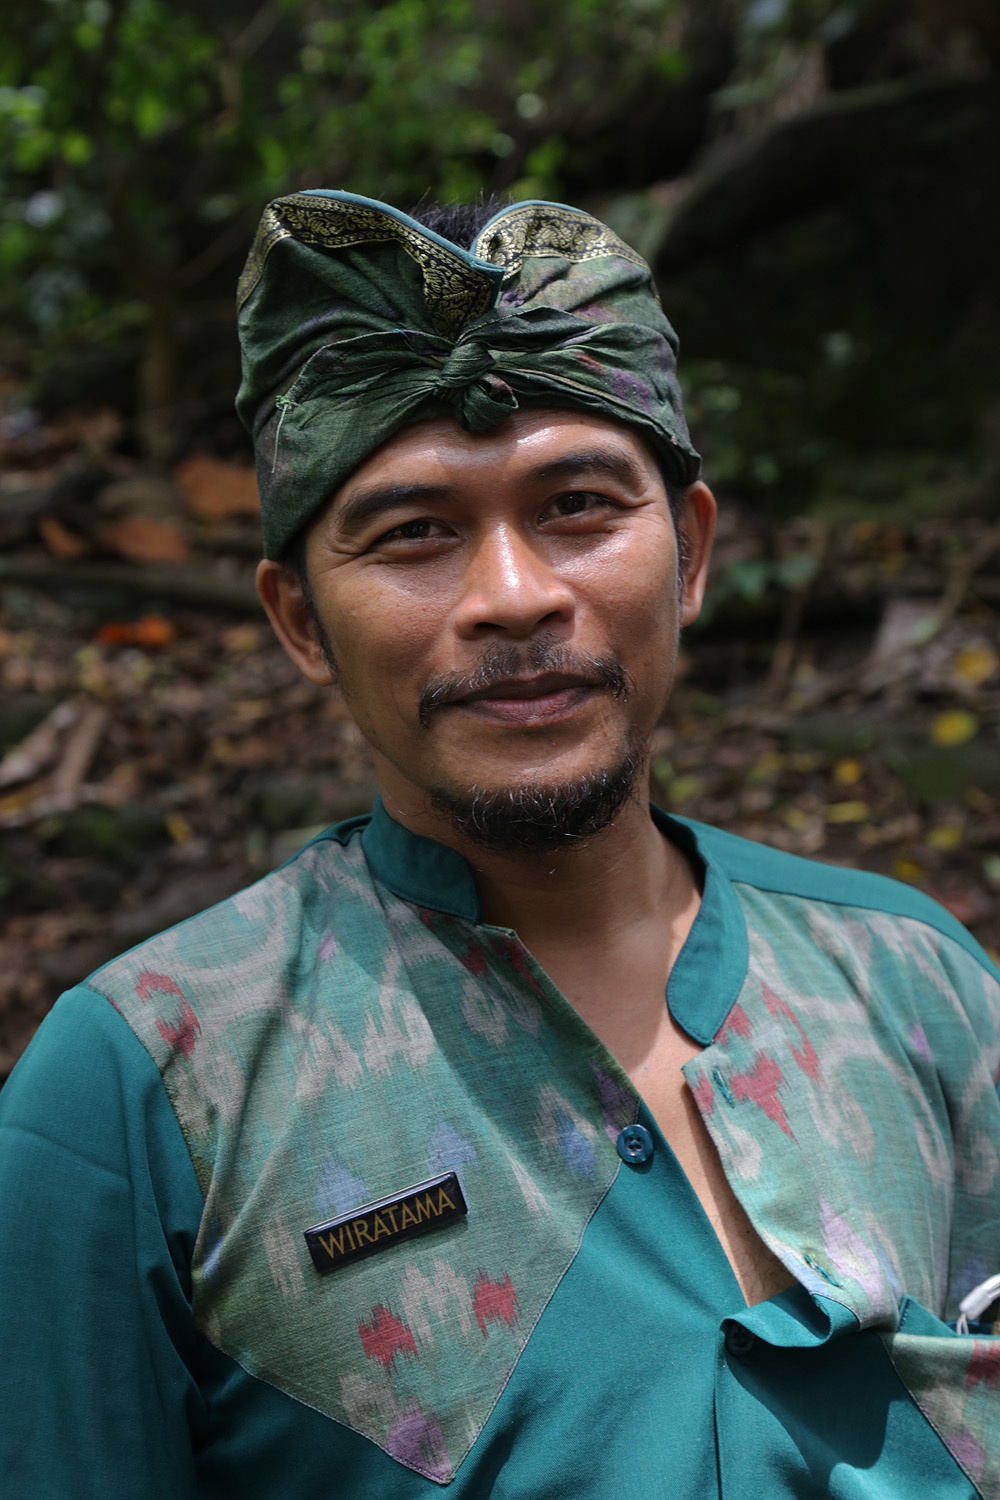 bill-hocker-caretaker-monkey-forest-ubud-bali-indonesia-2016